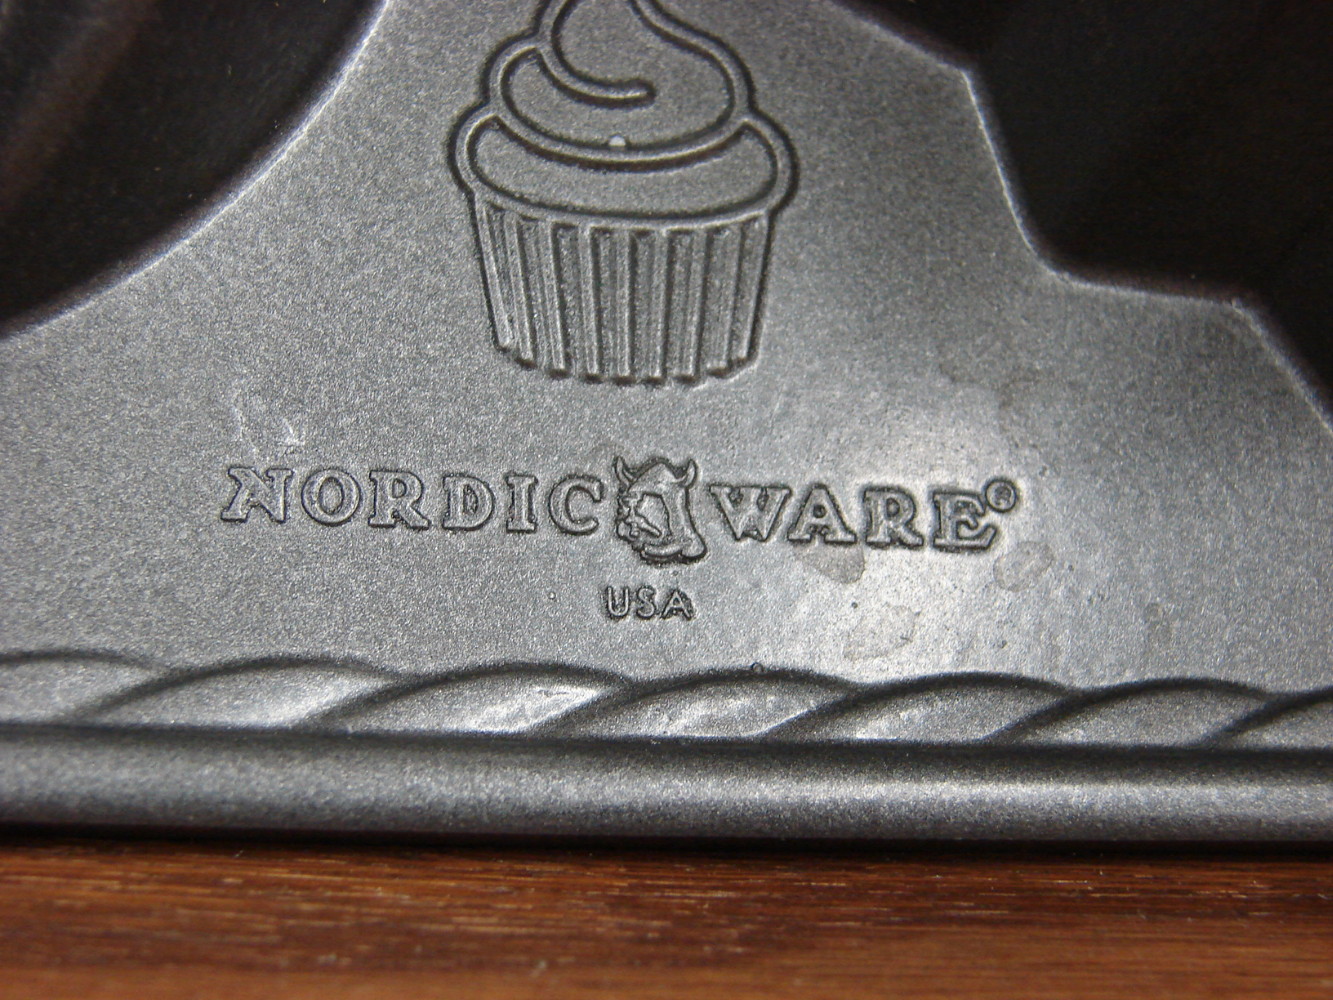 Scandinavian Nordic Ware Heavy Duty Oversized Cute Cupcake Mold Cake Pan